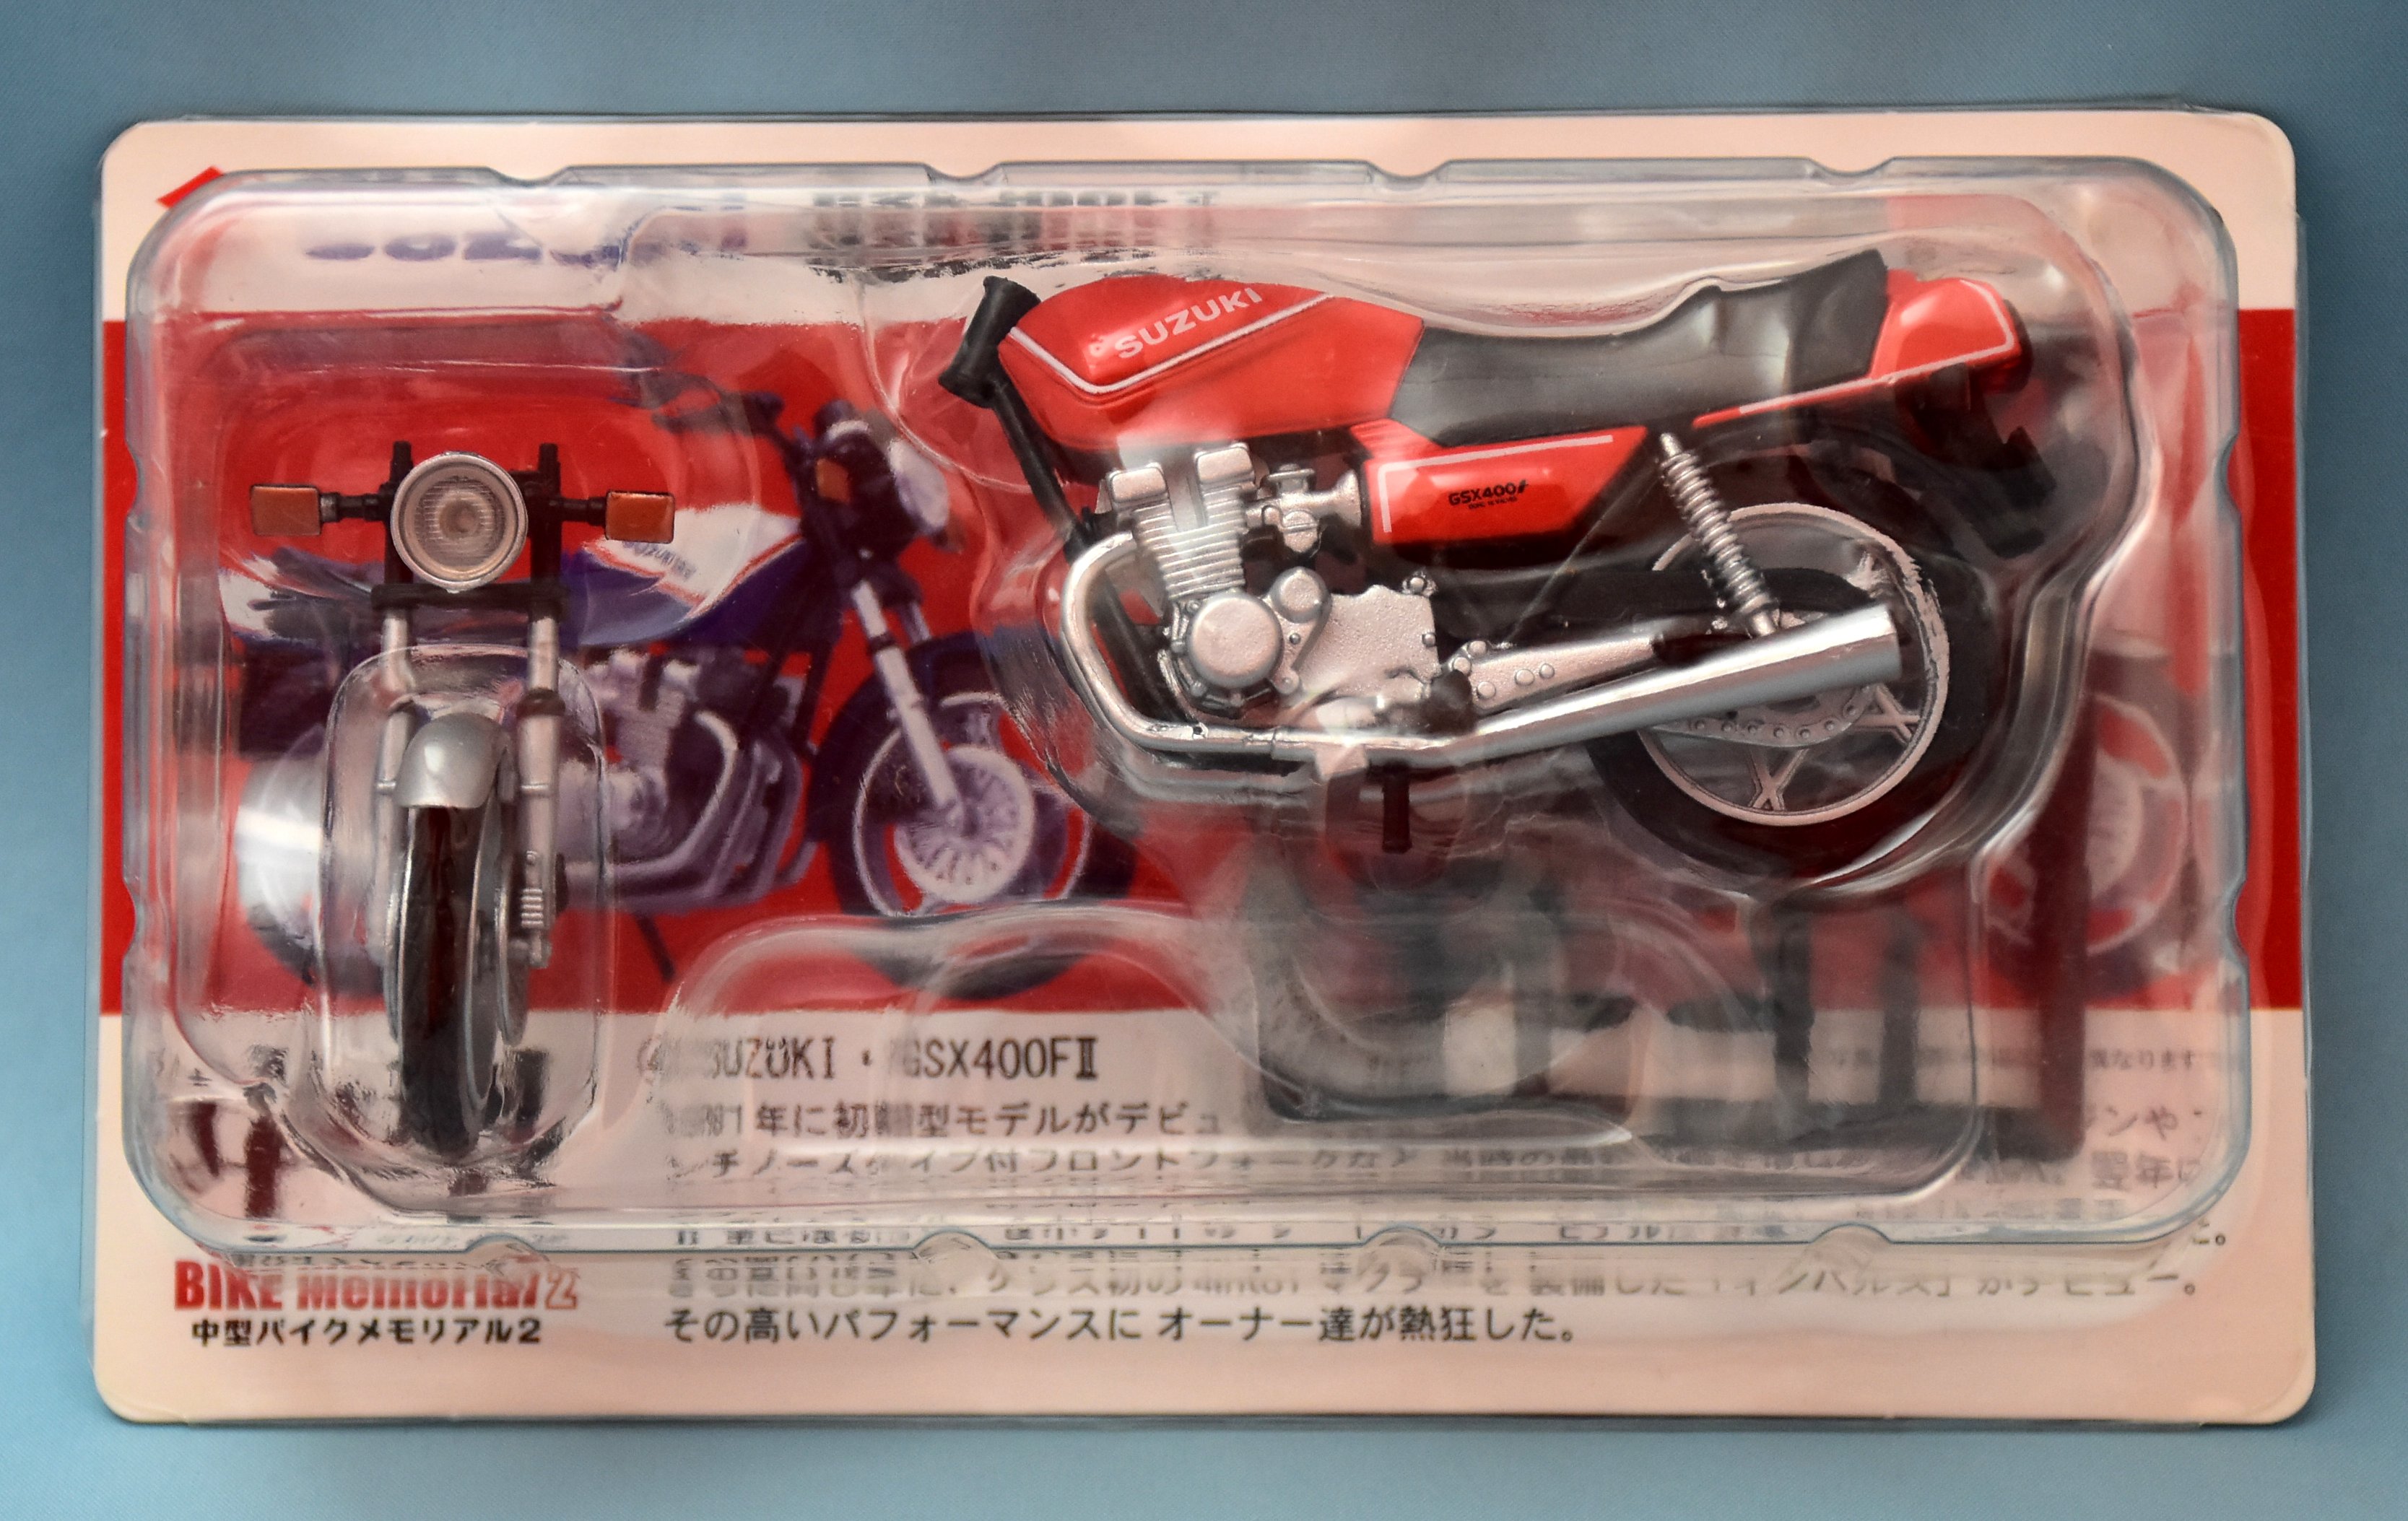 Furuta Confectionery Medium-sized bike Memorial 2 Suzuki GSX400FII